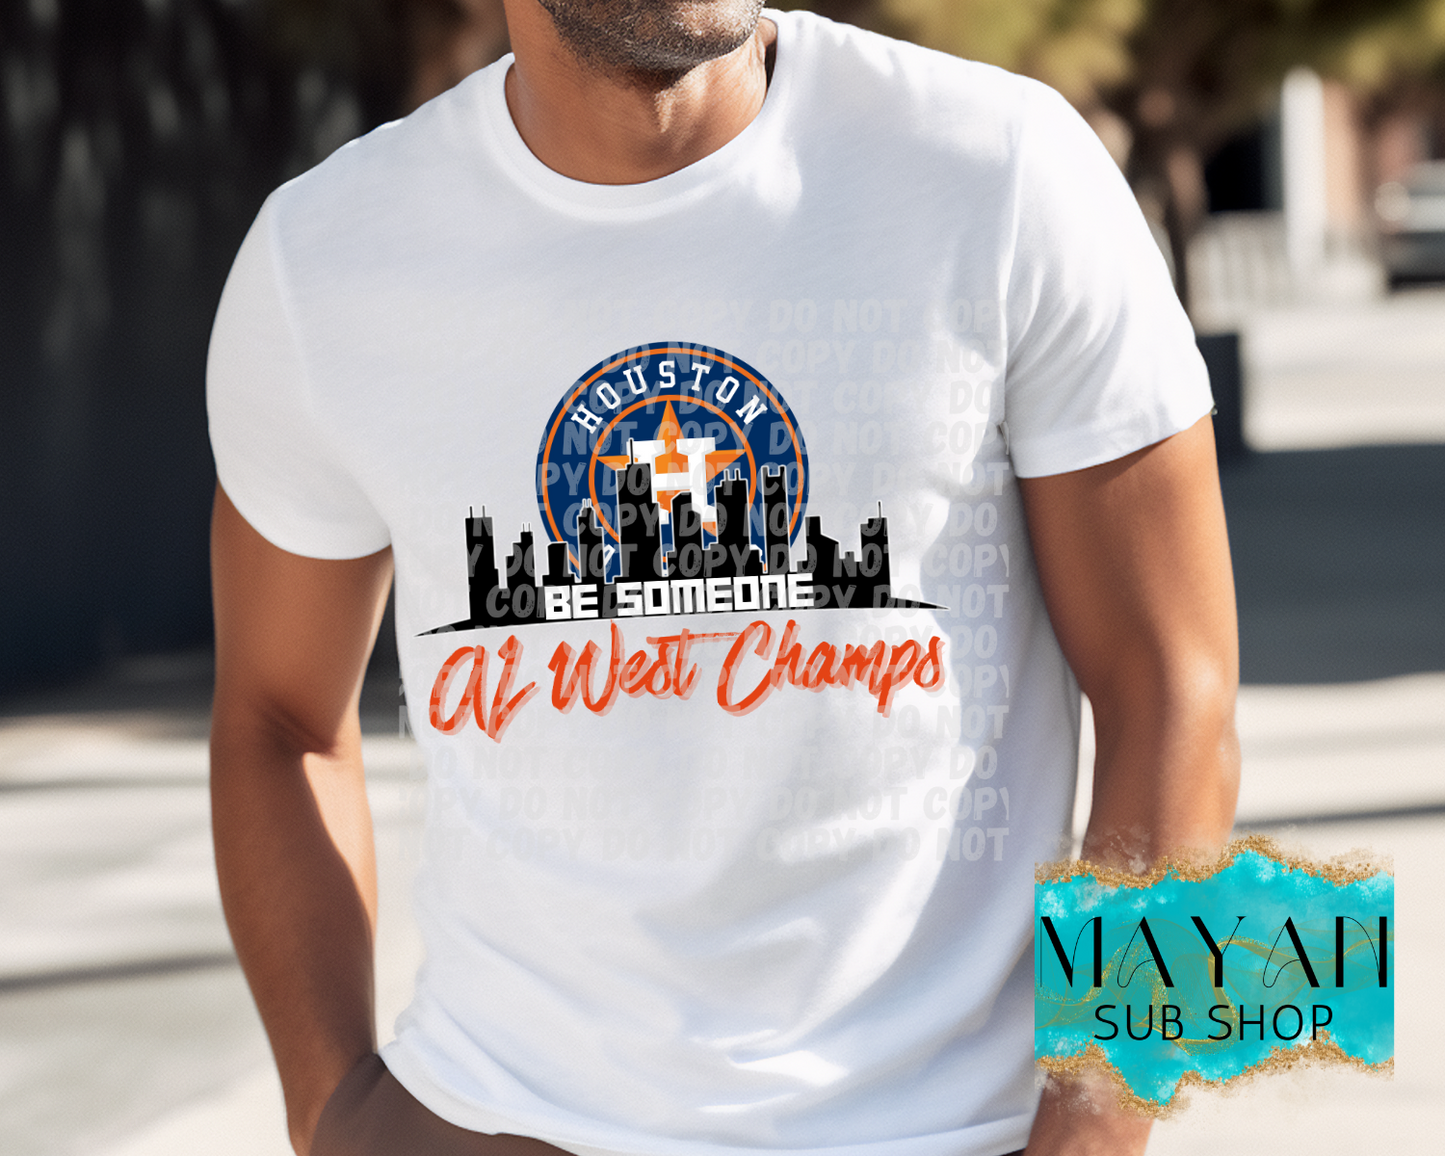 West Champs Houston shirt. -Mayan Sub Shop